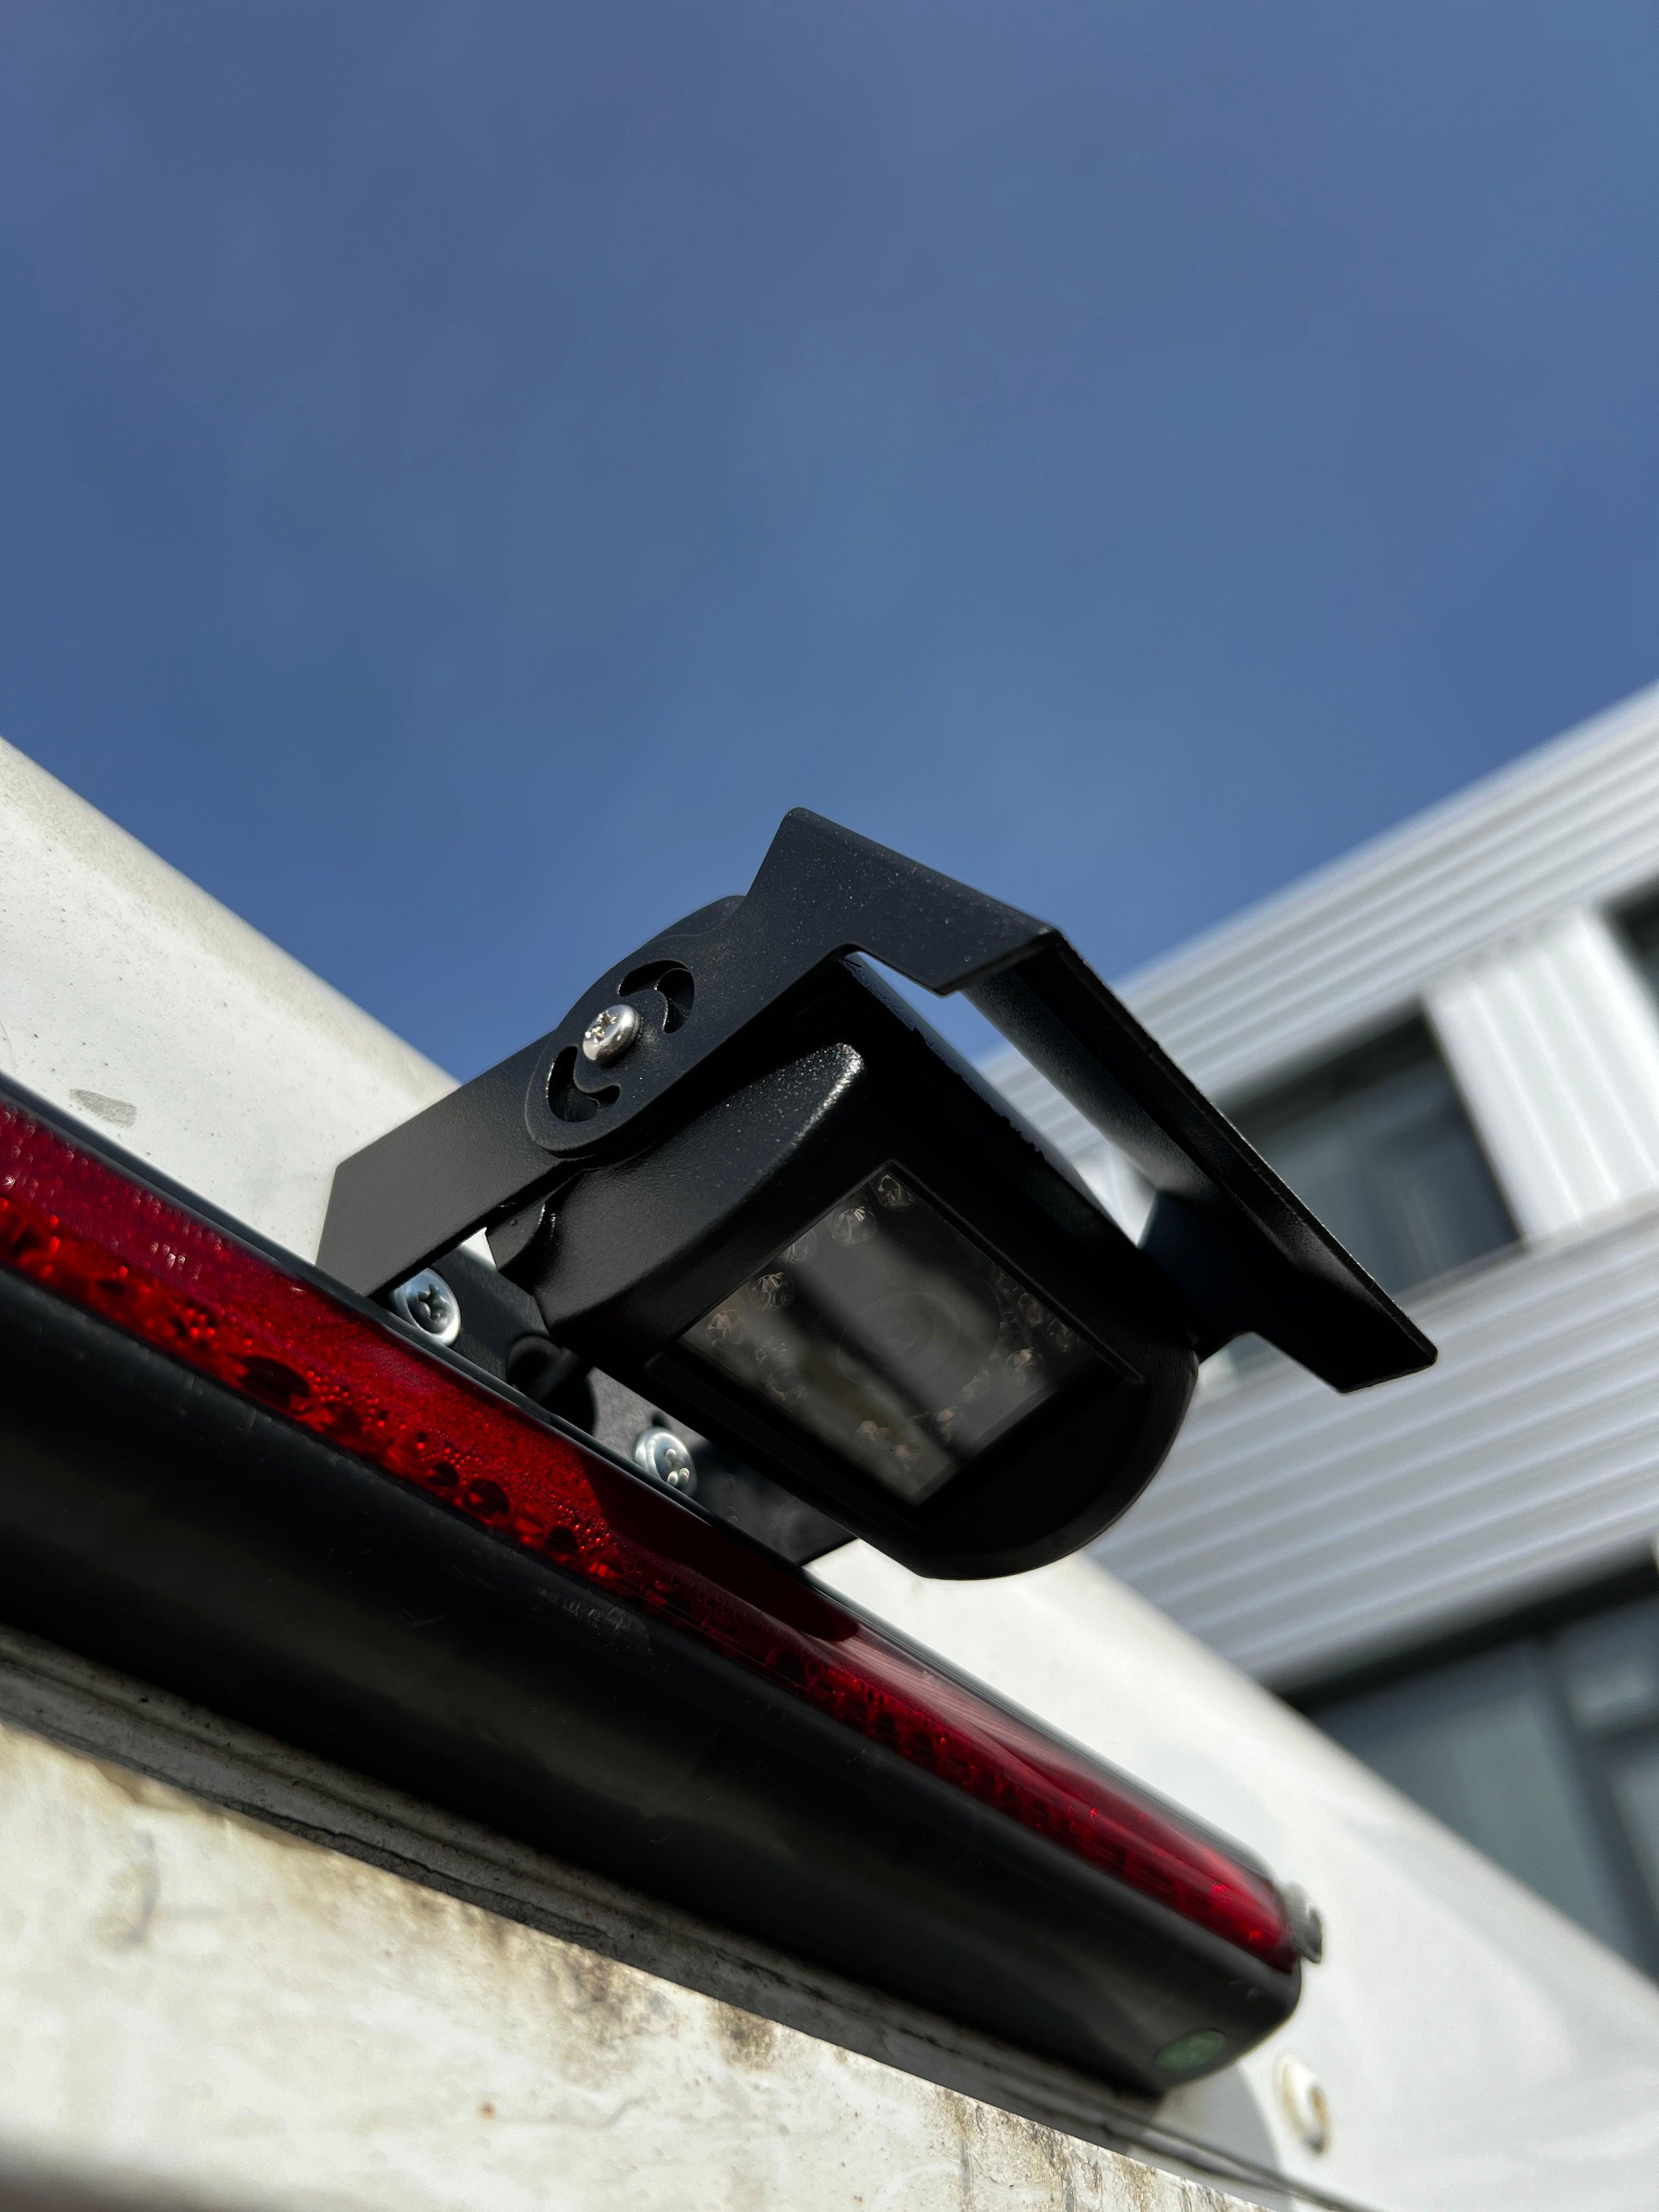 120° Wide Angle Lens HD Universal Van Heavy Duty Reverse Rear View Camera - AUTOSTYLE UK